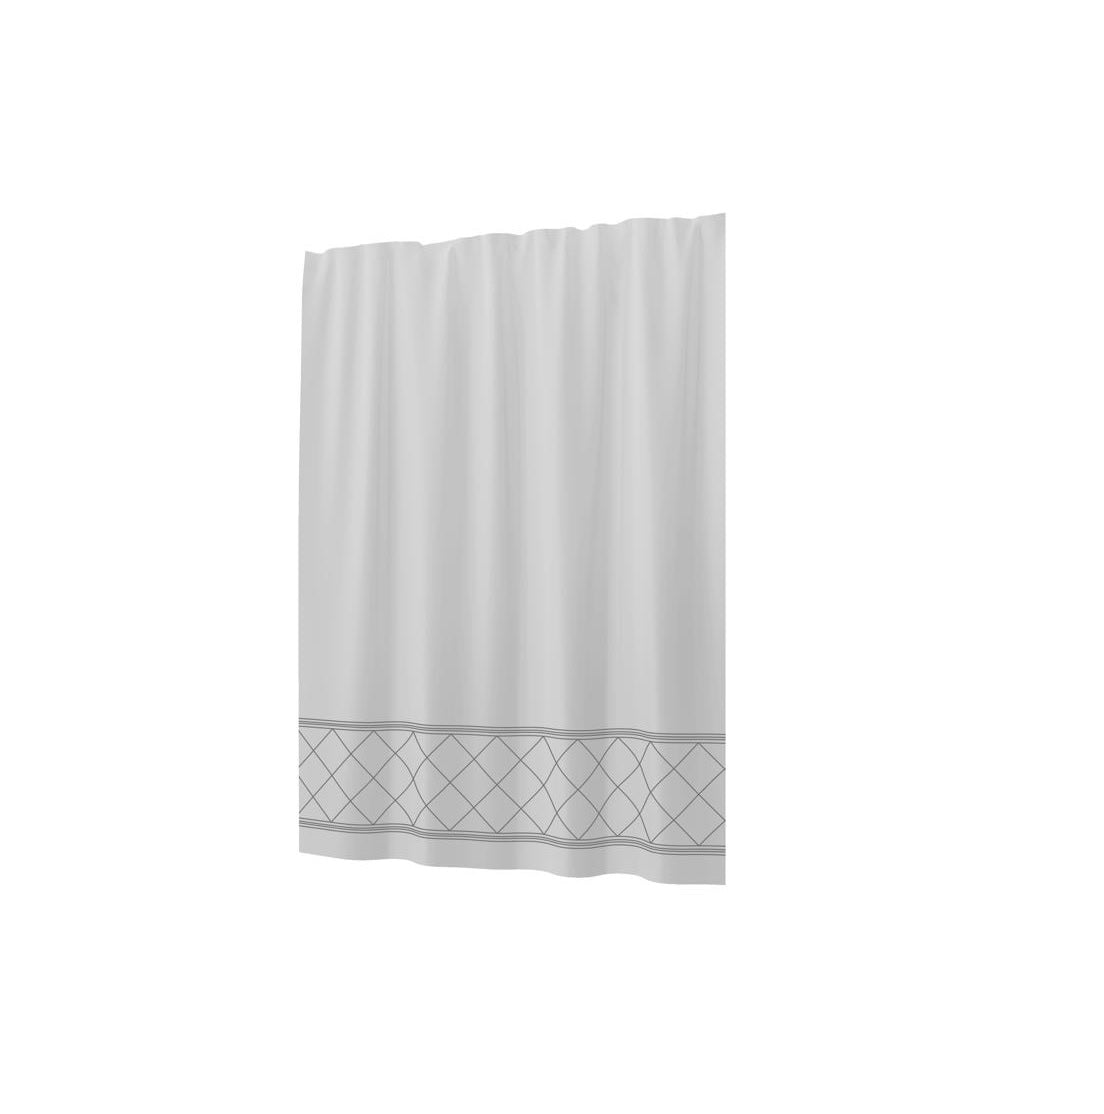 Sttelli RAS-115-WH Radiance Shower Curtain, Polyester